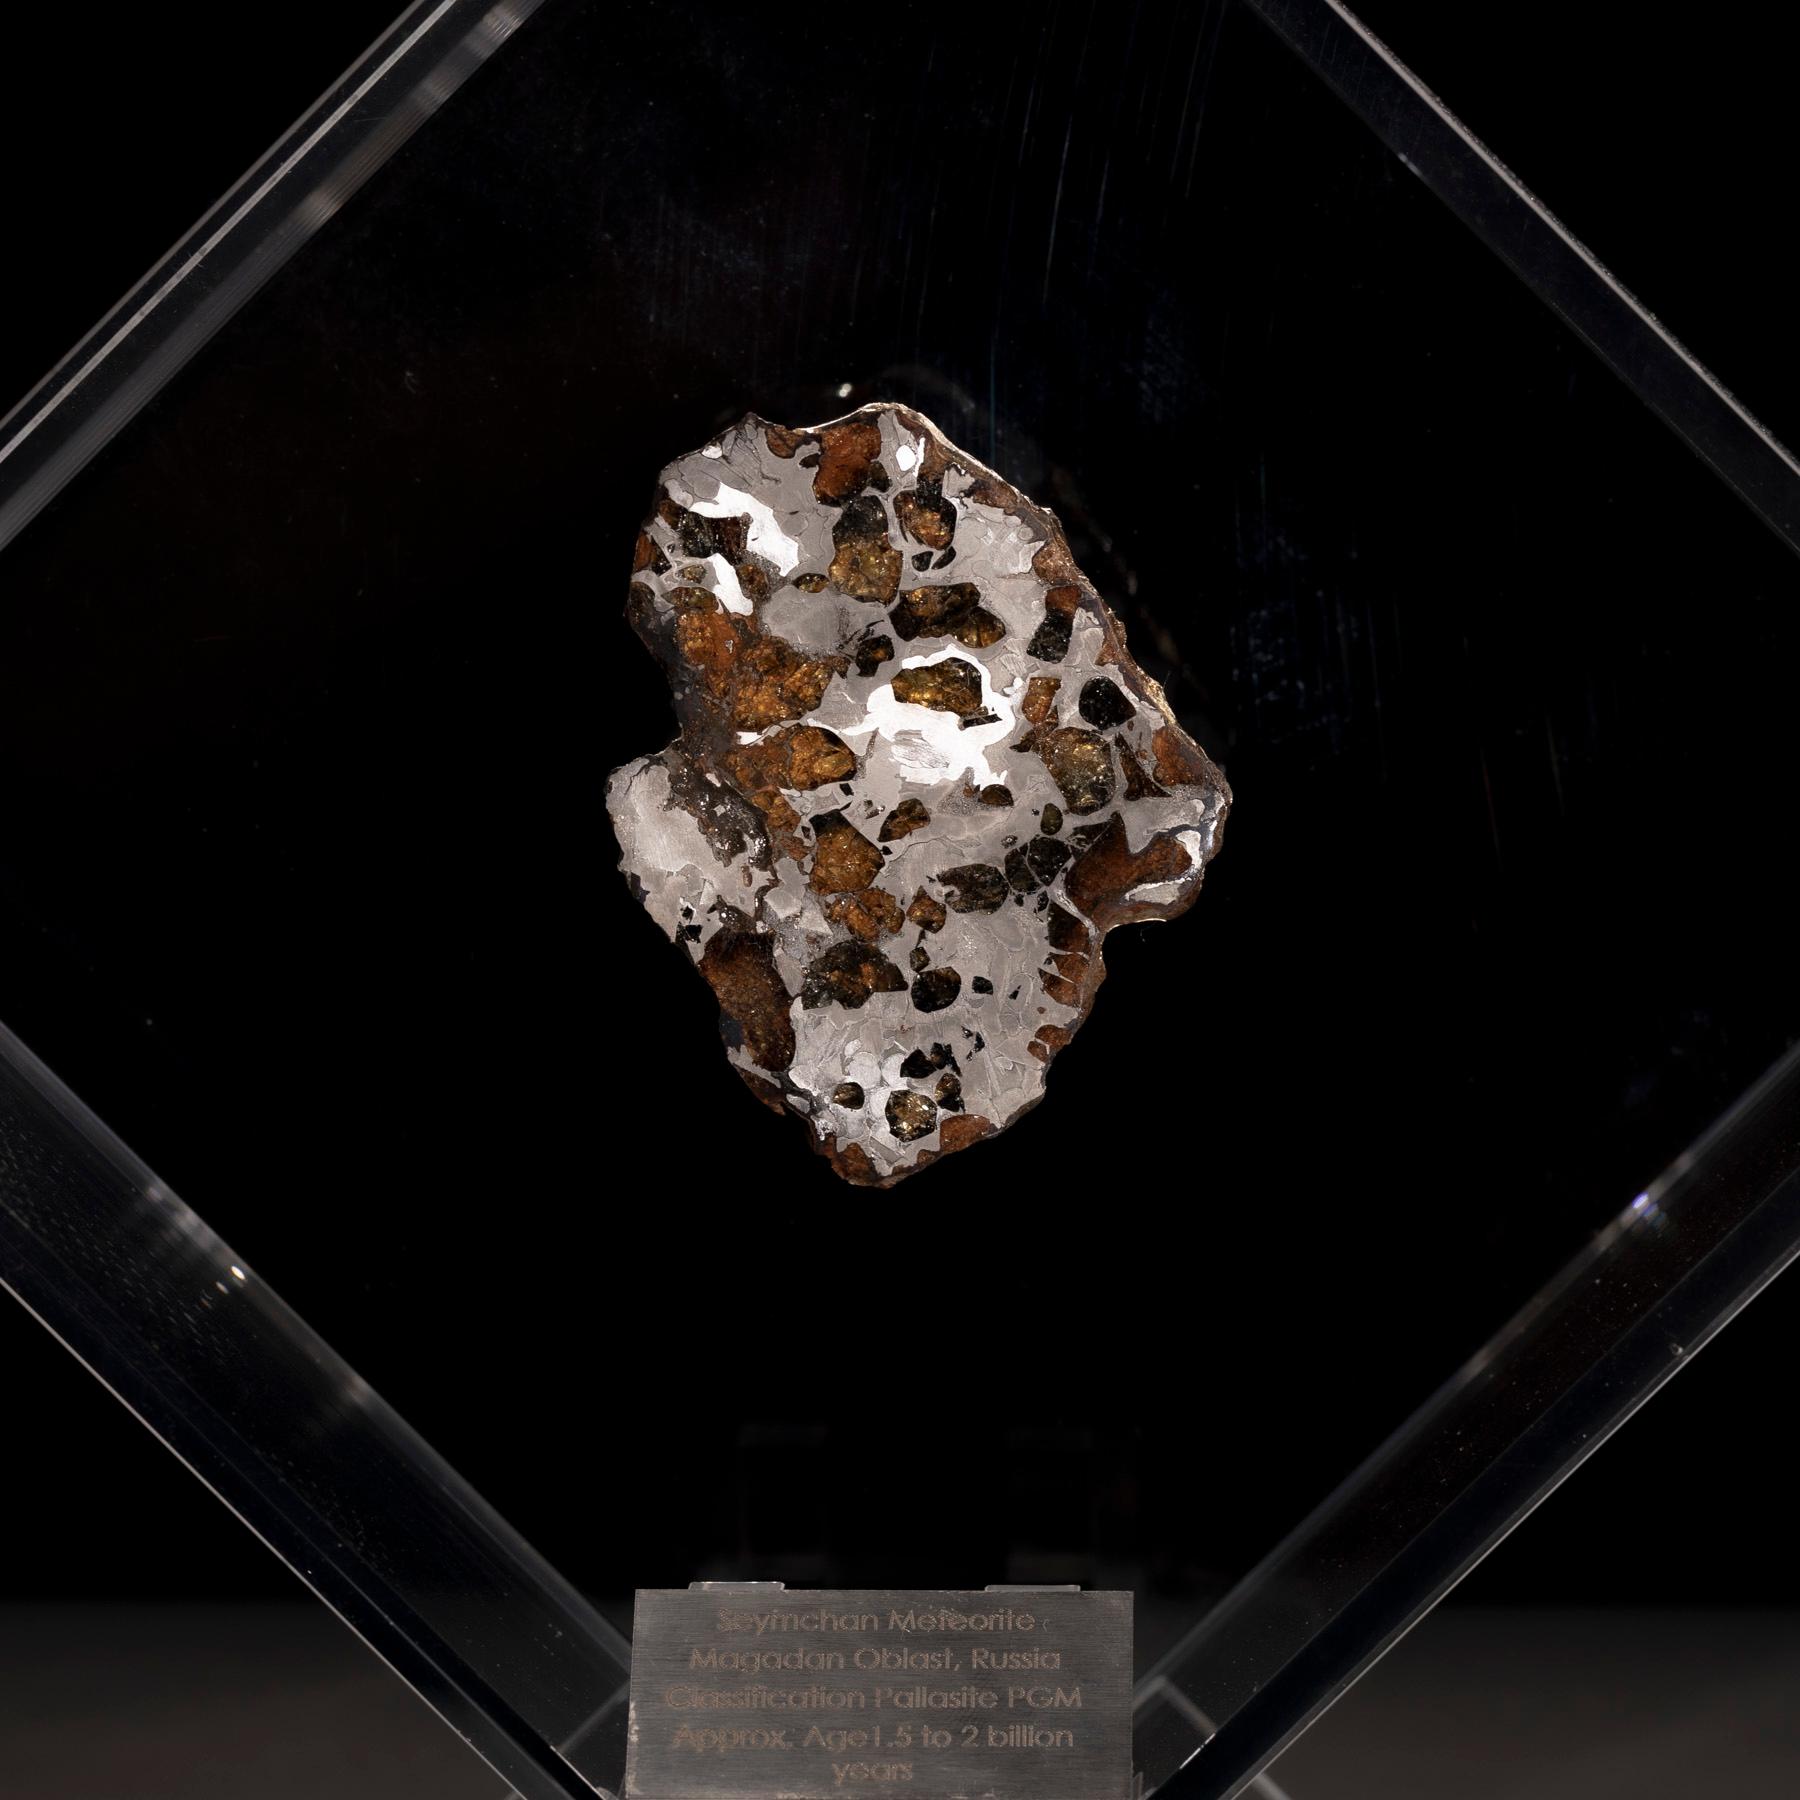 Original Design, Seymchan with Olivine Meteorite in a Acrylic Display 2